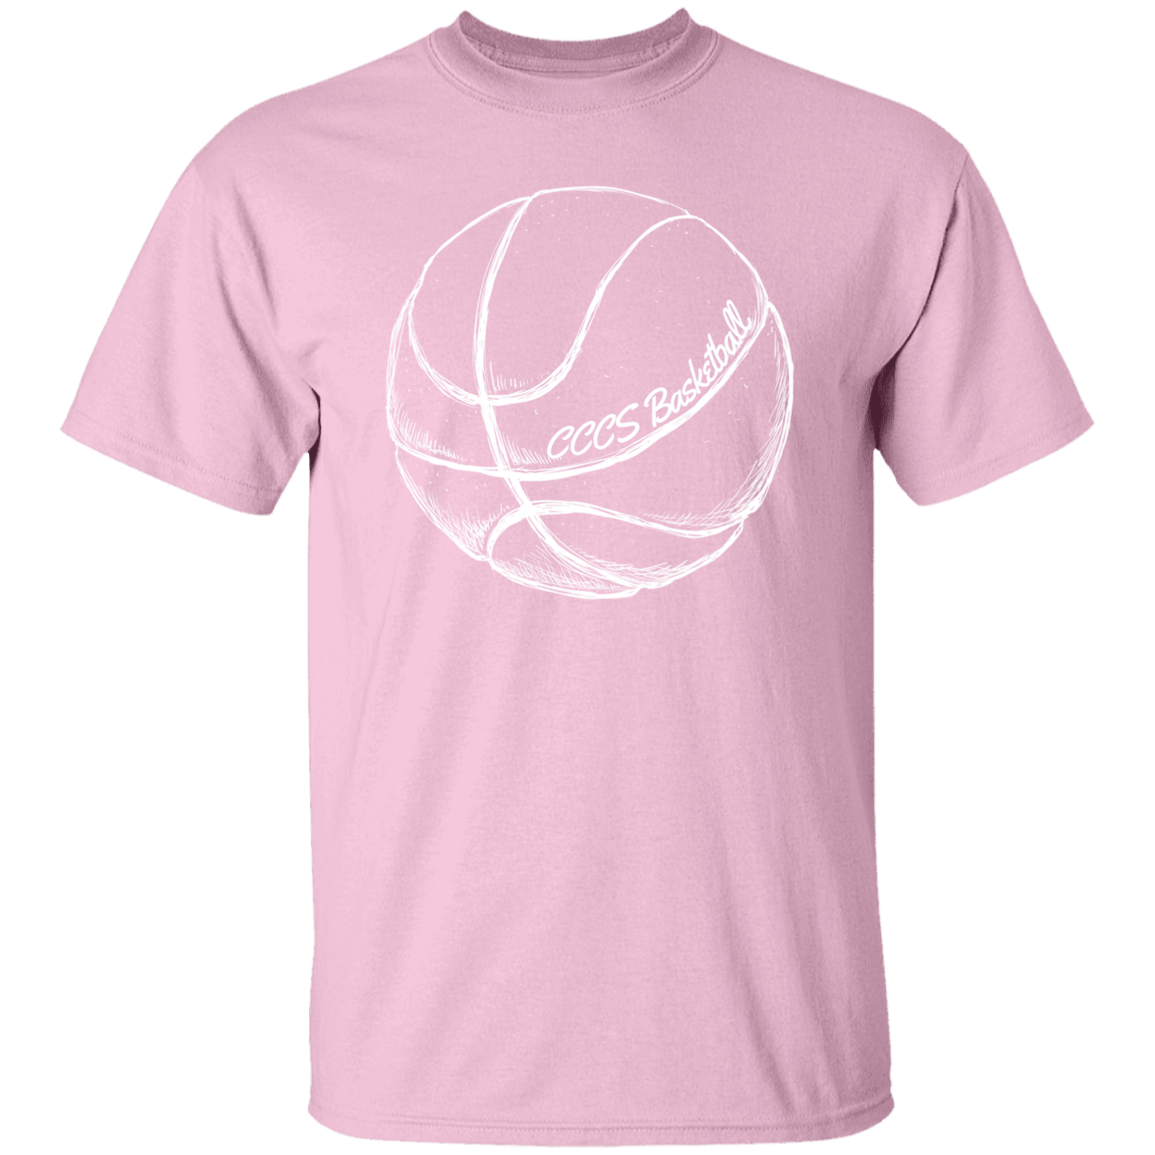 CCCS Basketball Drawing- Adult Size T-Shirt